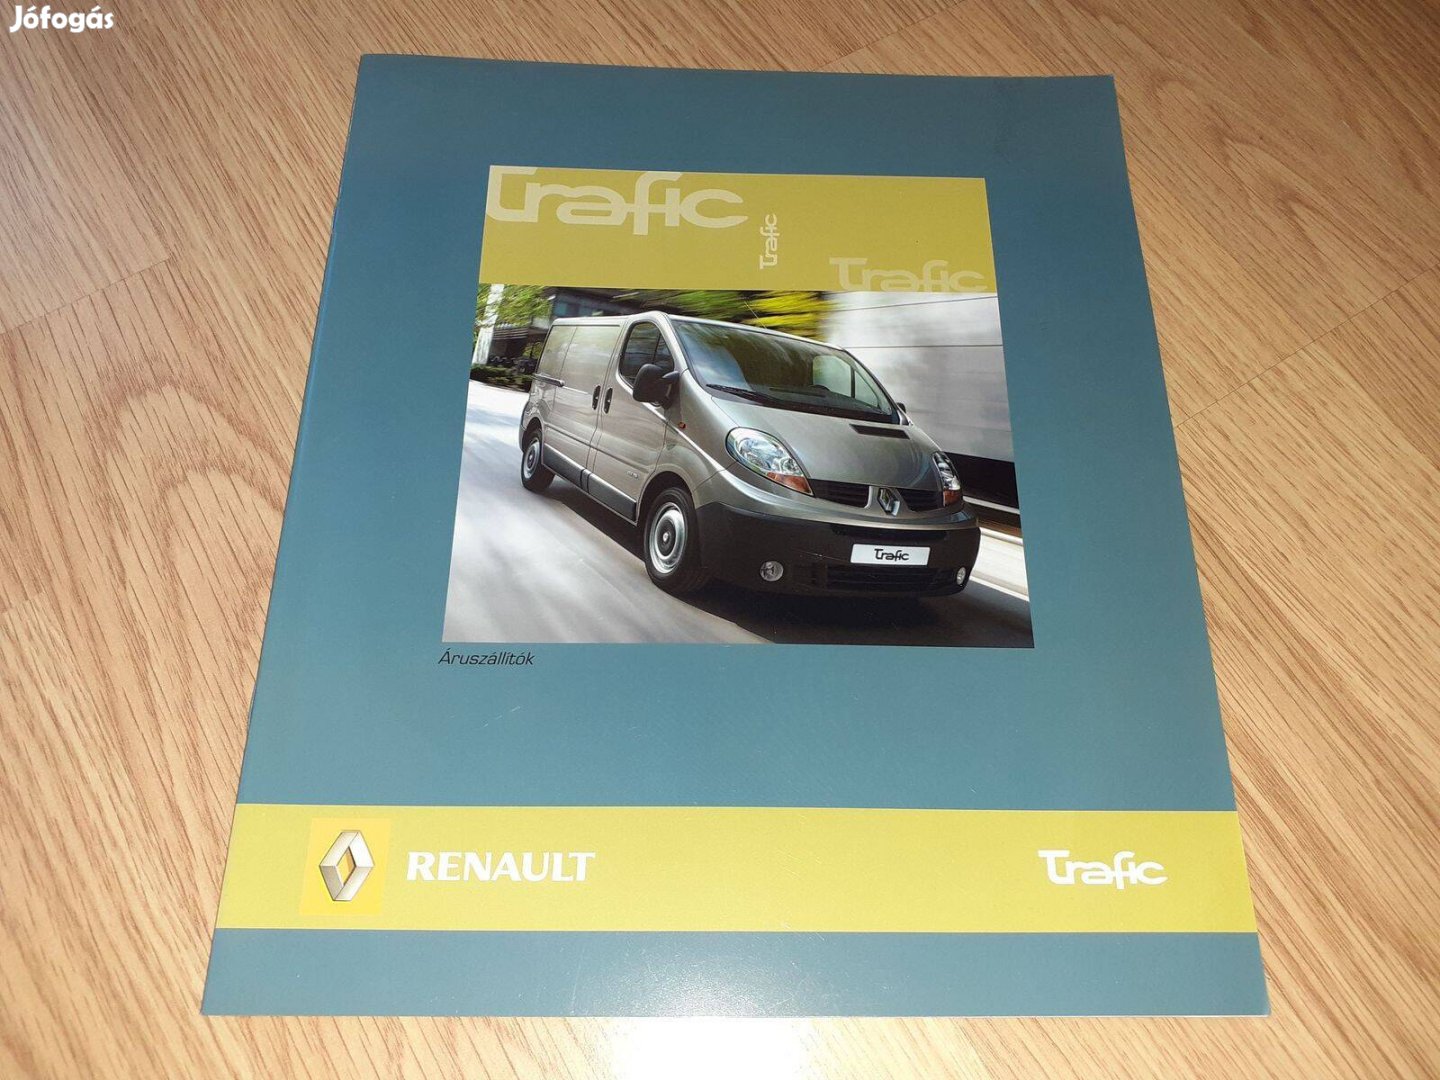 Renault Trafic prospektus - 2006, magyar nyelvű